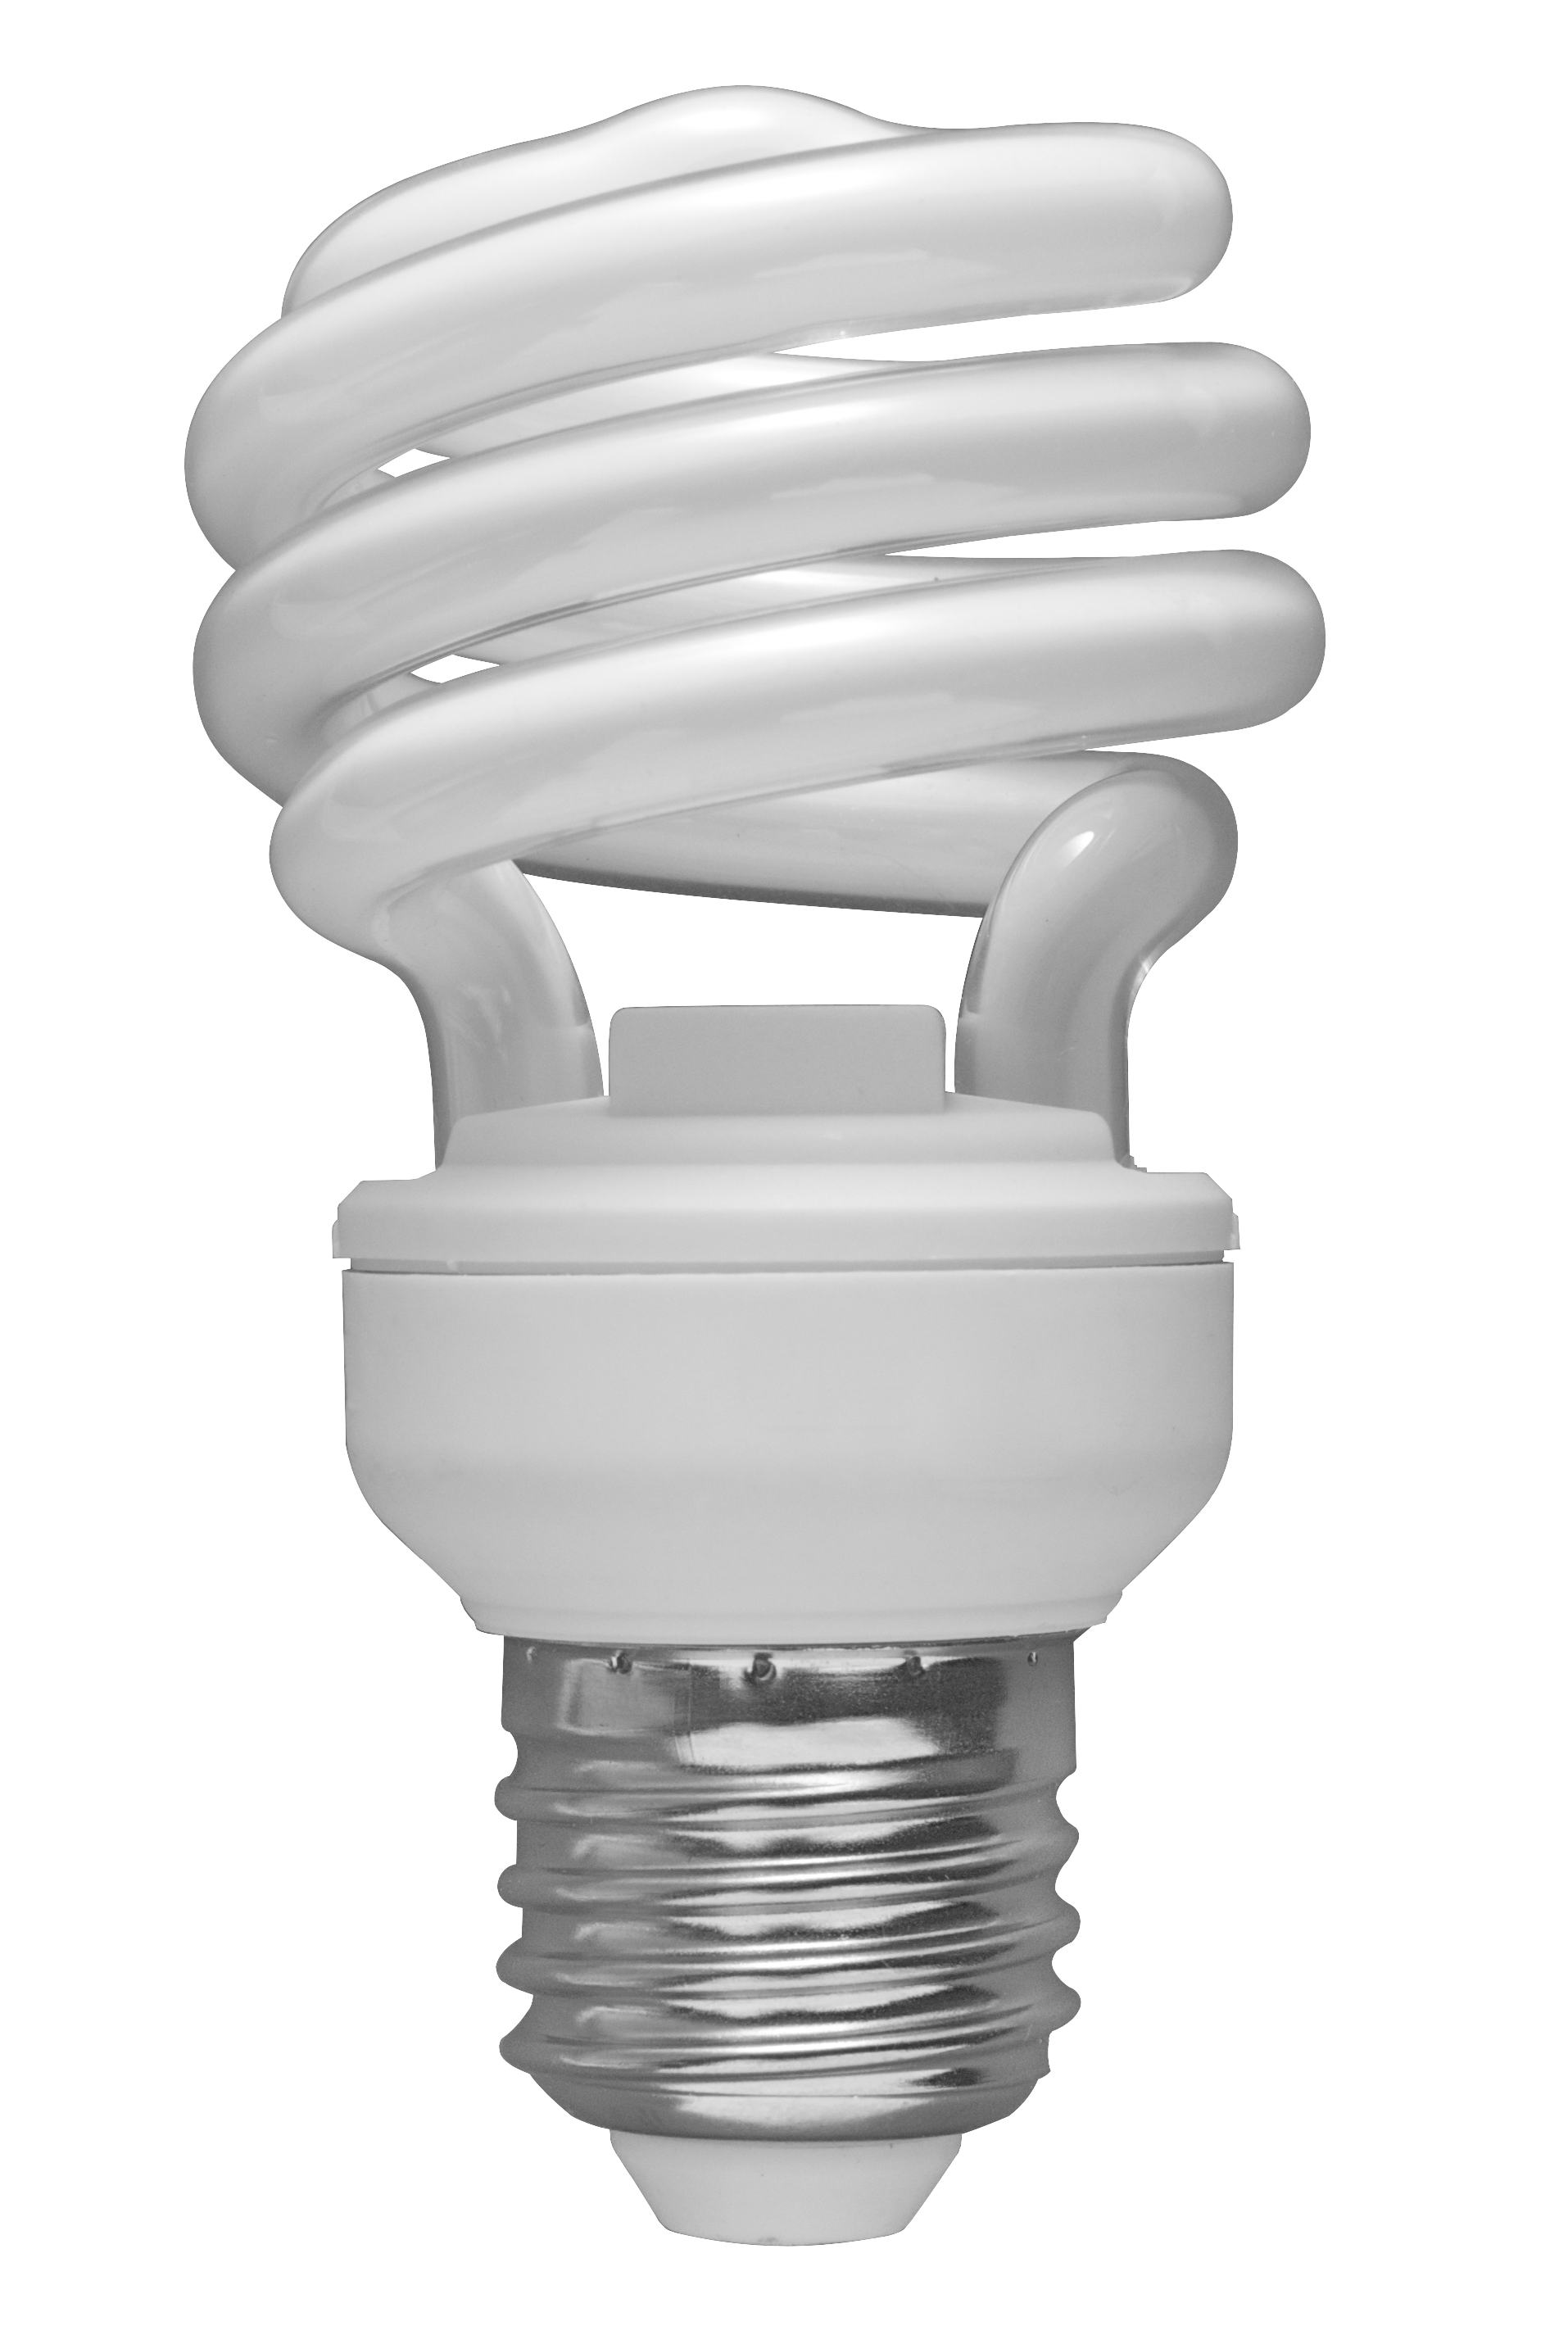 White Day Light Bulb Png Image - Light Bulb, Transparent background PNG HD thumbnail